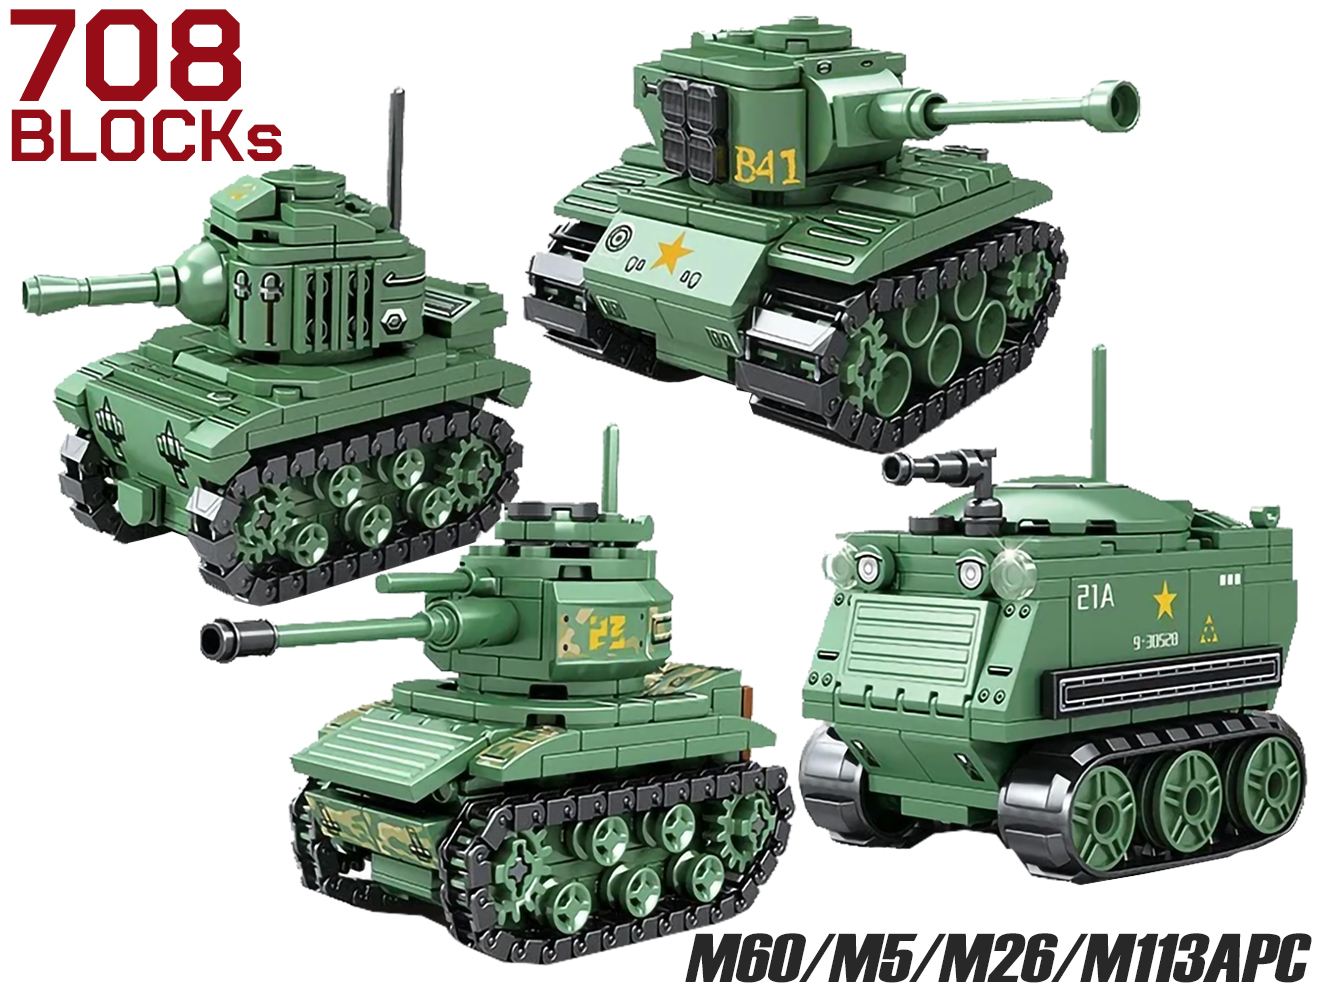 AFM M60パットン/M5軽戦車/M26パーシング/M113APC 4台セット(計708Blocks)◆ブロック 知育玩具 プレゼント 子供 米軍 アメリカ 軍 軍隊 戦車 リアル ミリタリー